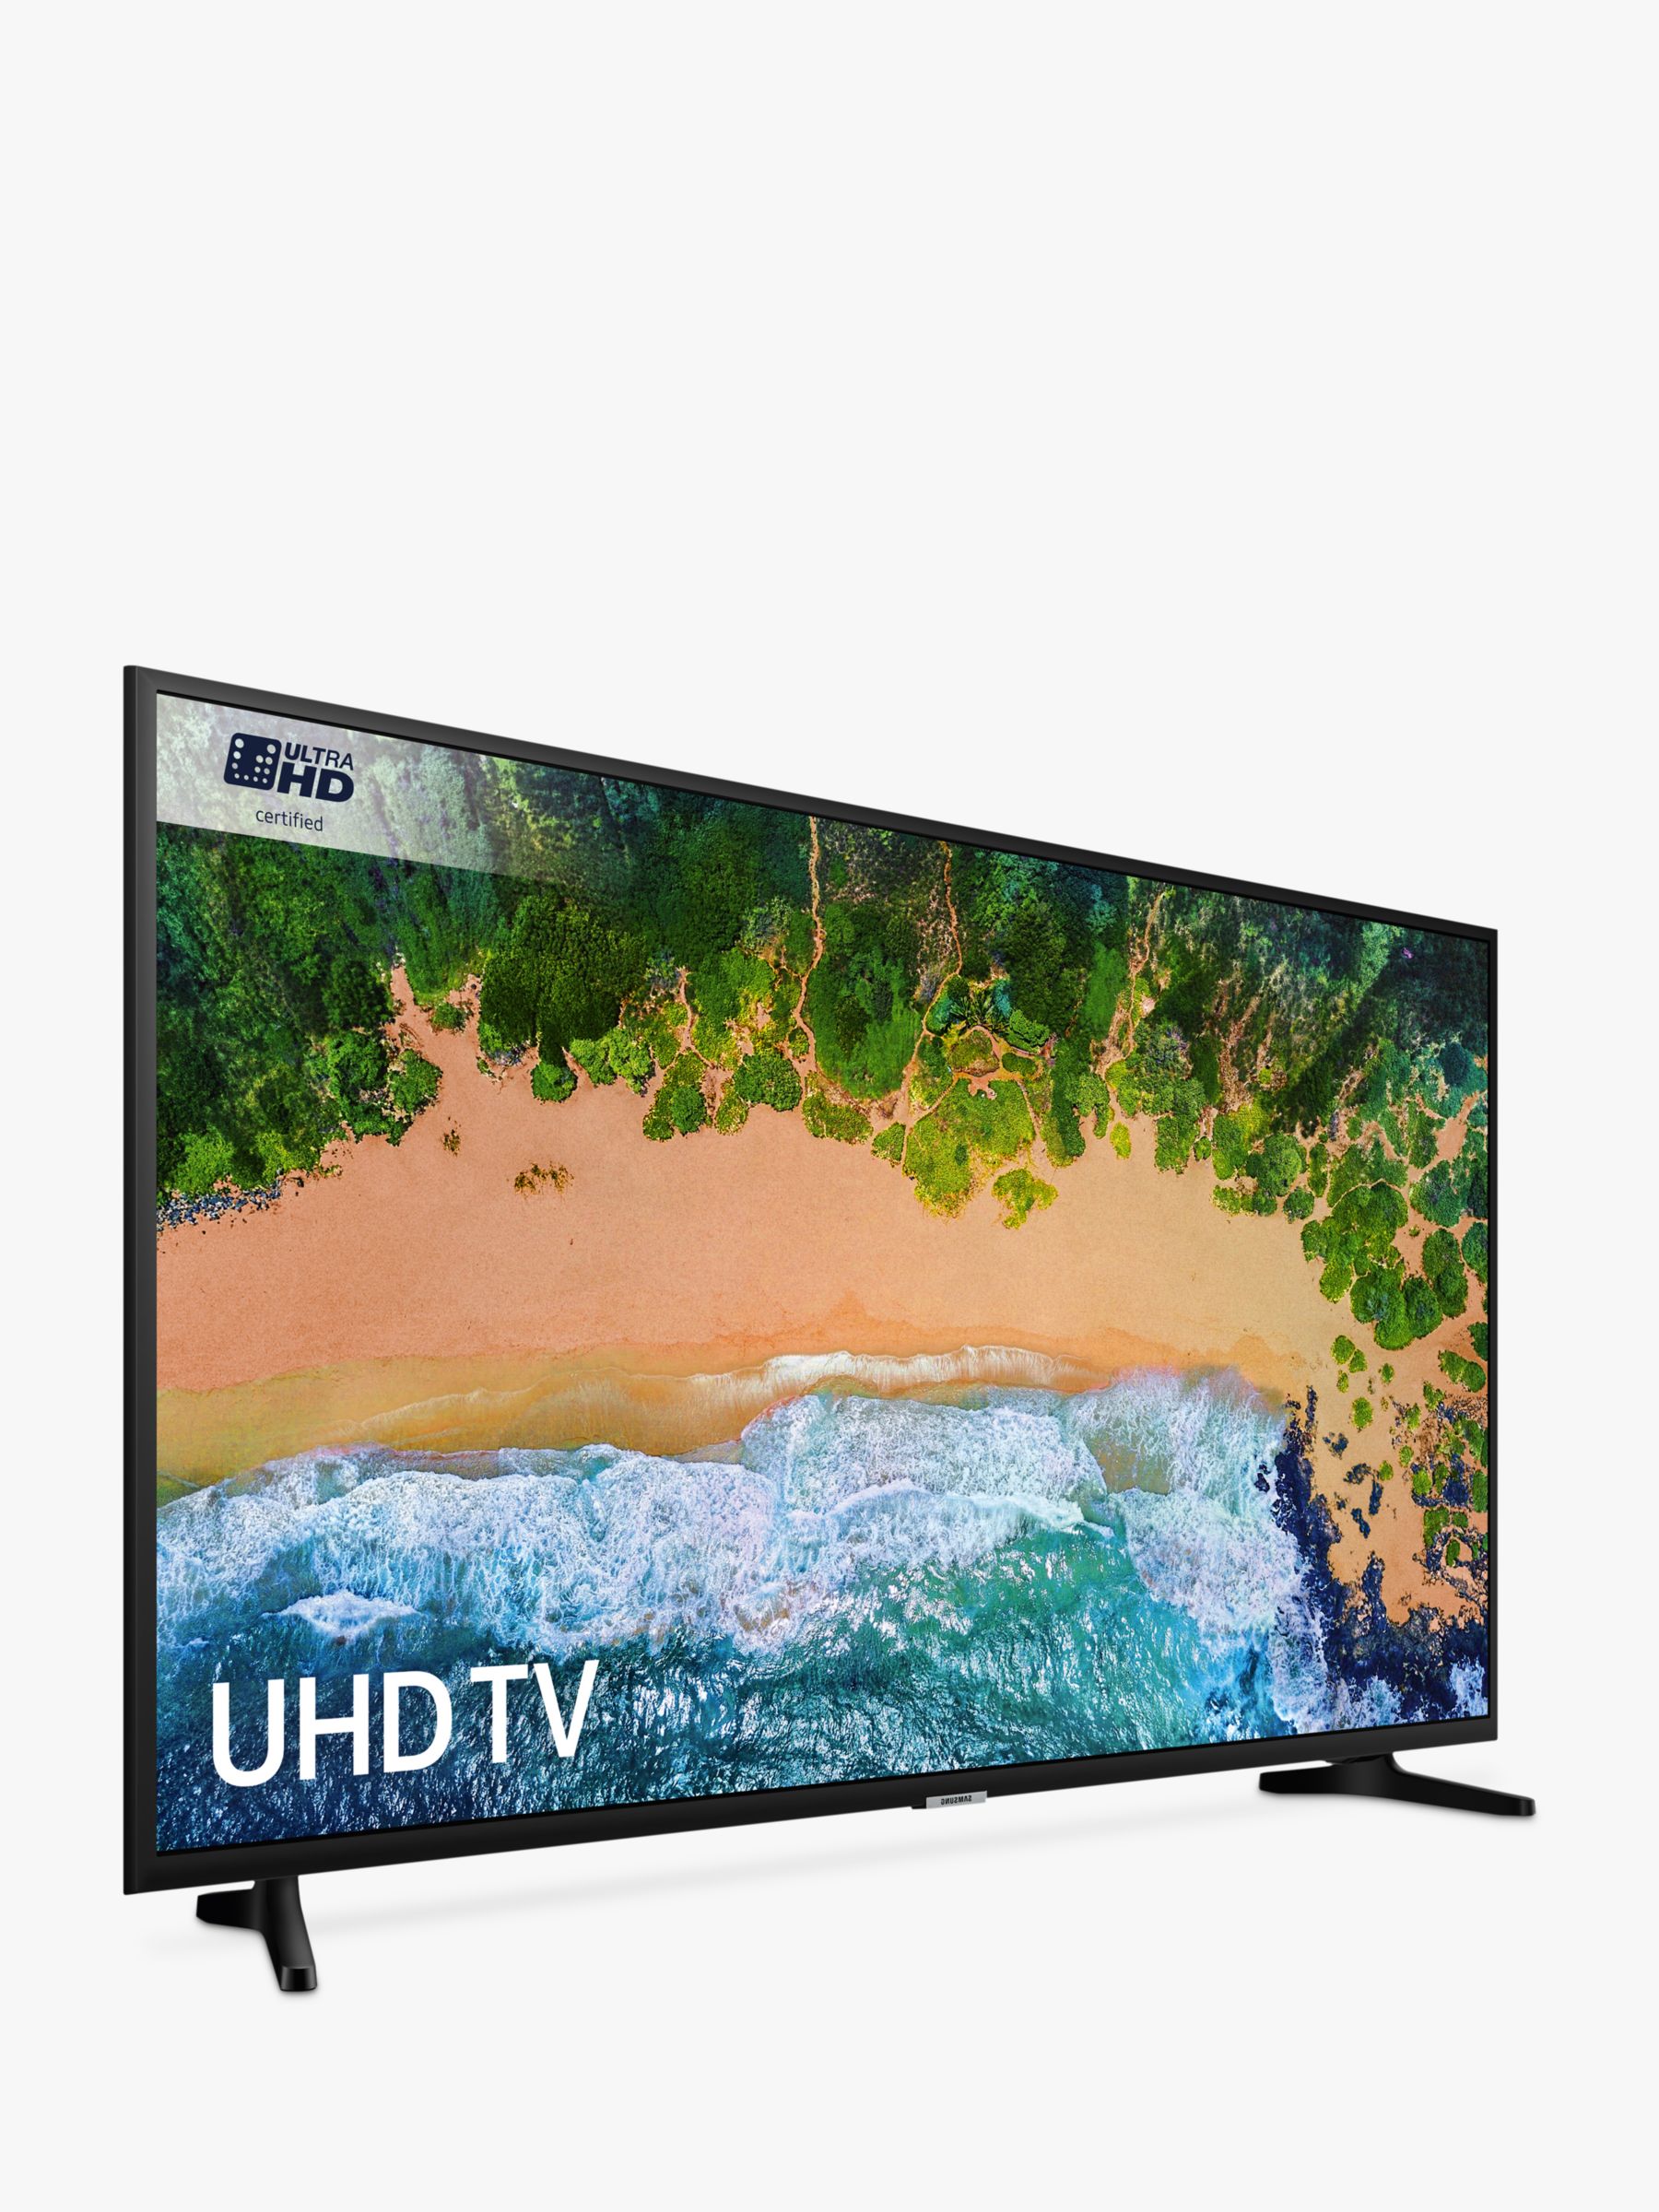 Samsung Ue50nu7020 Hdr 4k Ultra Hd Smart Tv 50 With Tvplus And 360 Design Ultra Hd Certified Black 3885